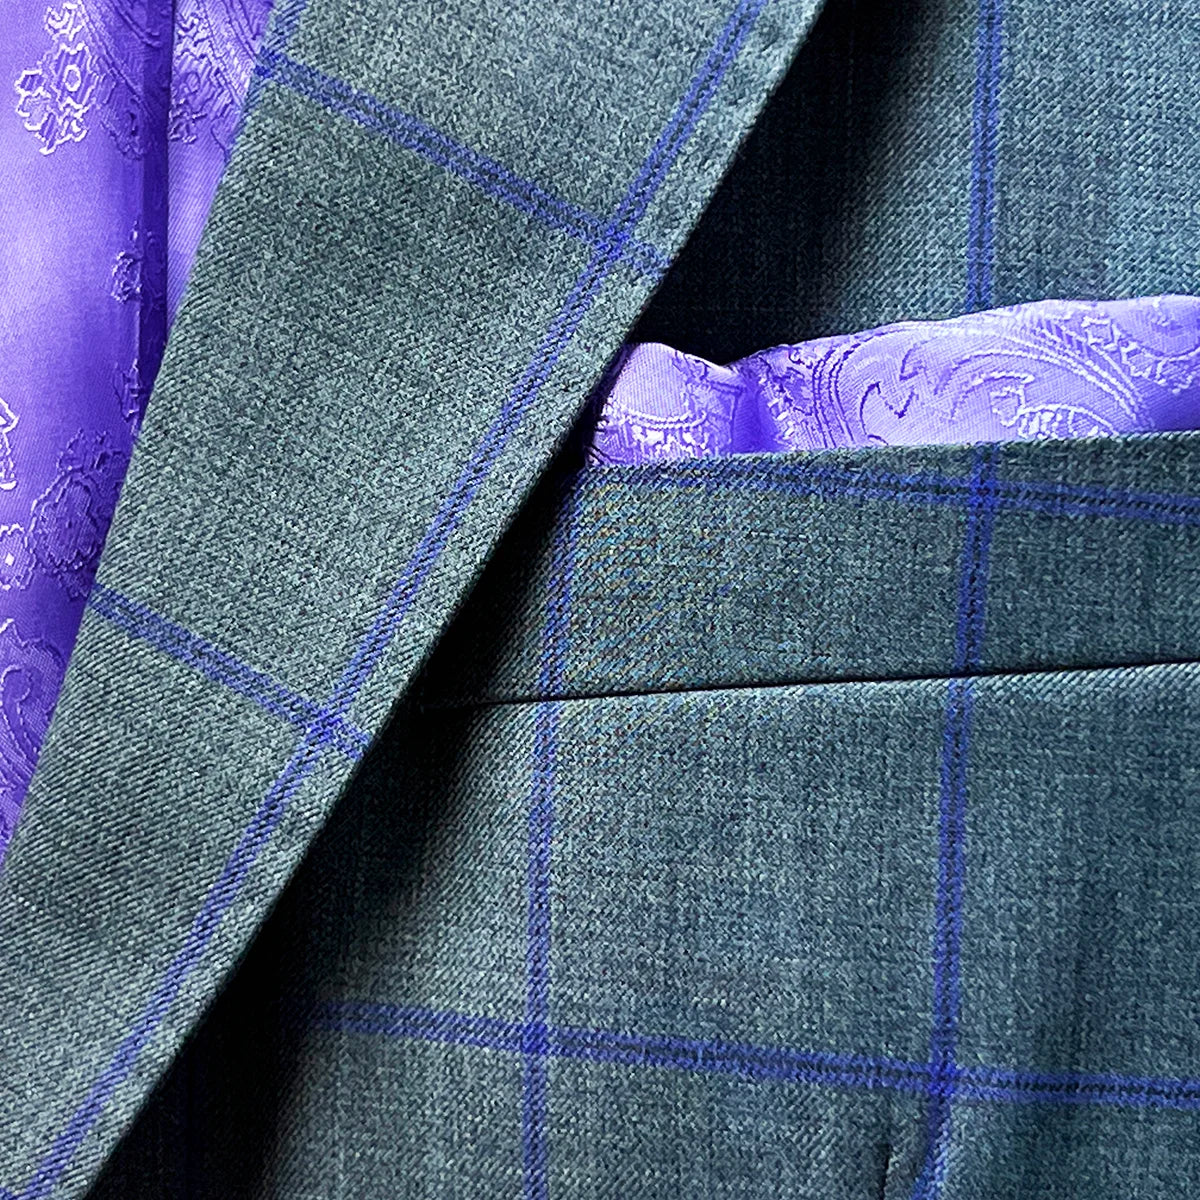 Pocket square in a grey purple windowpane sportcoat.